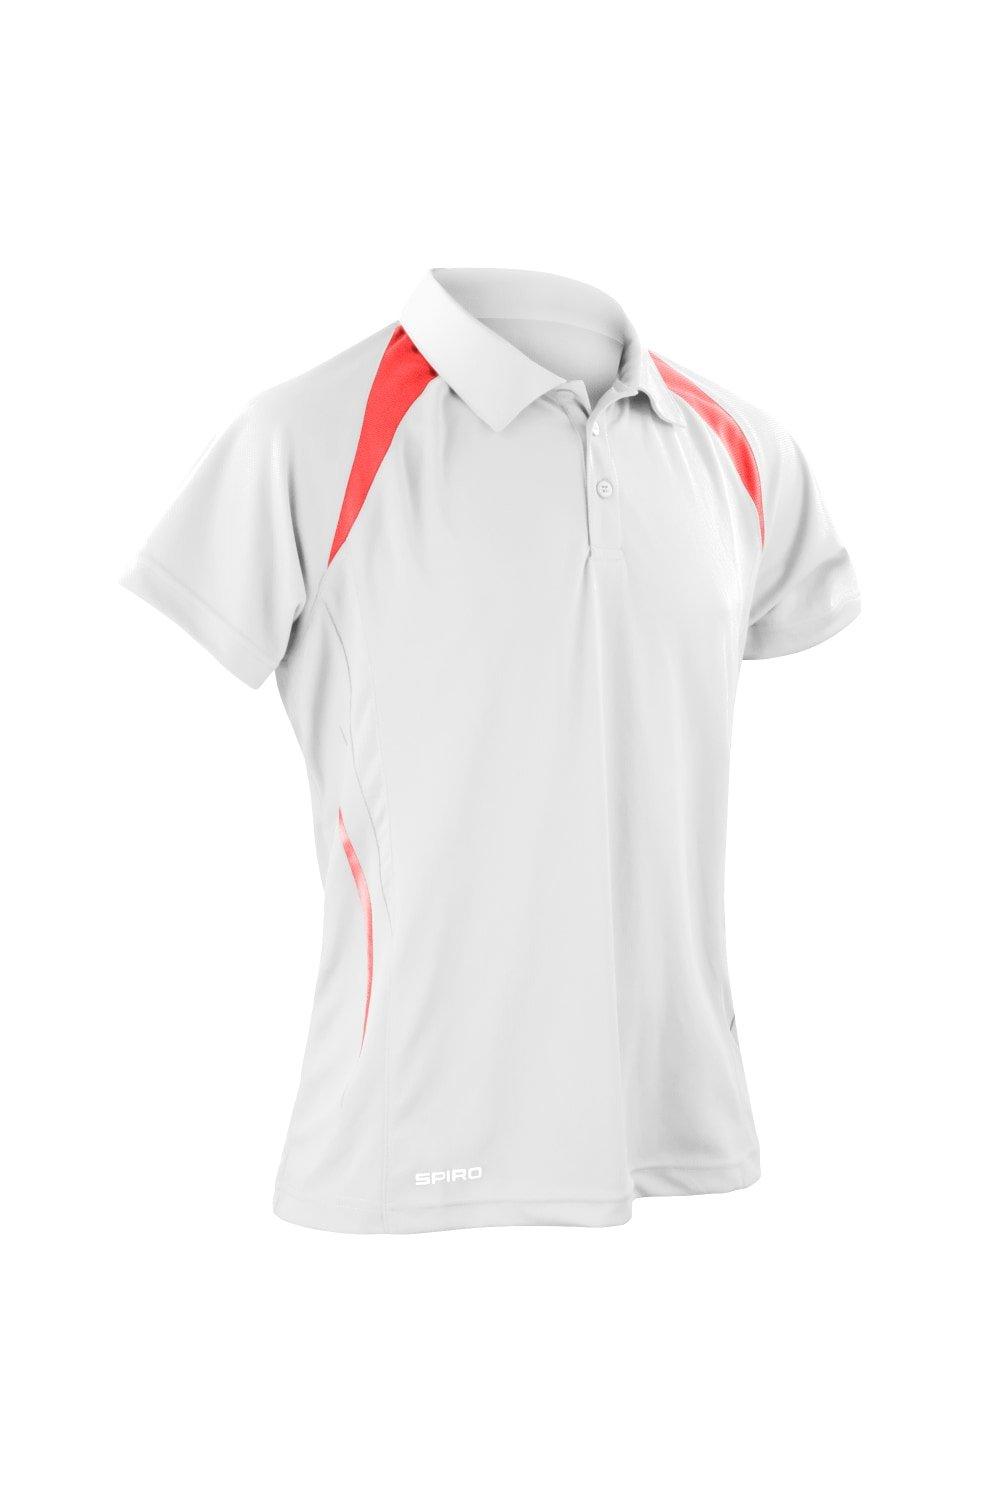 Рубашка поло Sports Team Spirit Performance Spiro, белый цена и фото